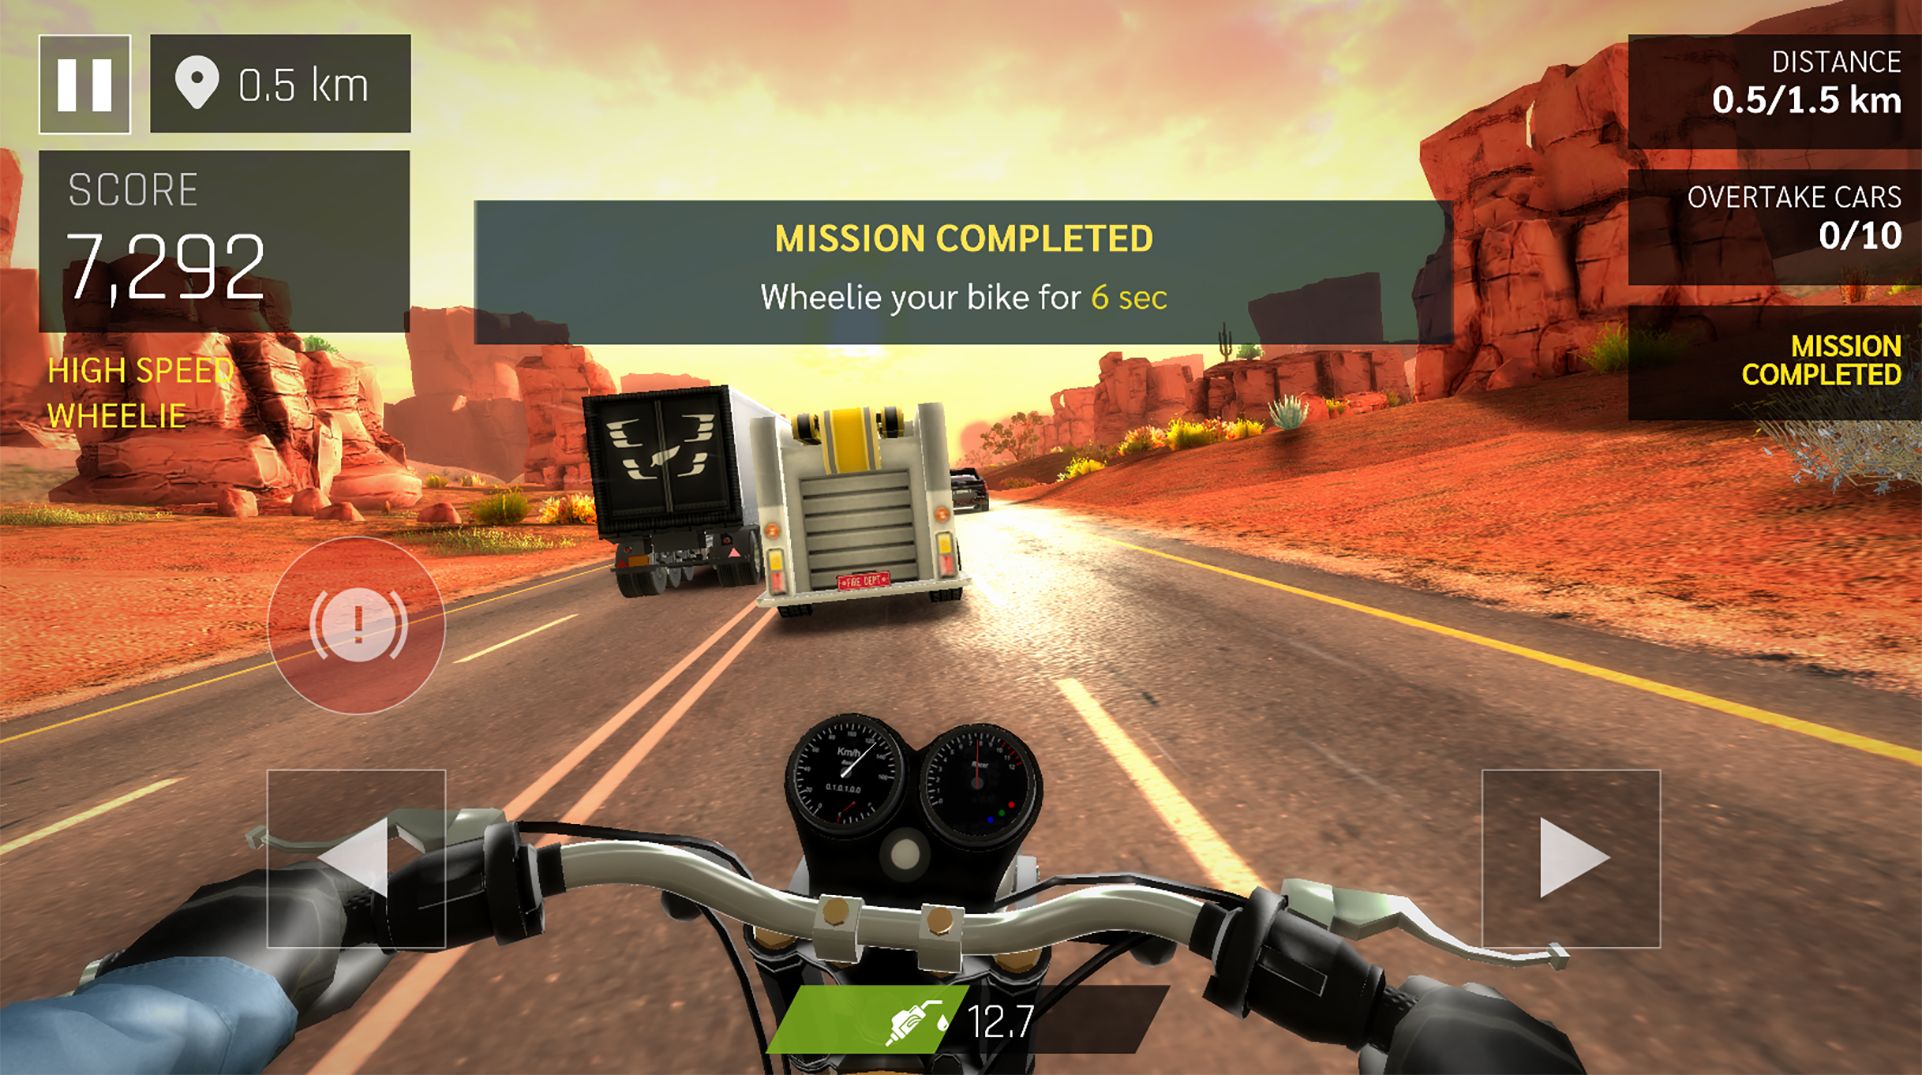 Real Moto Rider: Traffic Race - Android game screenshots.